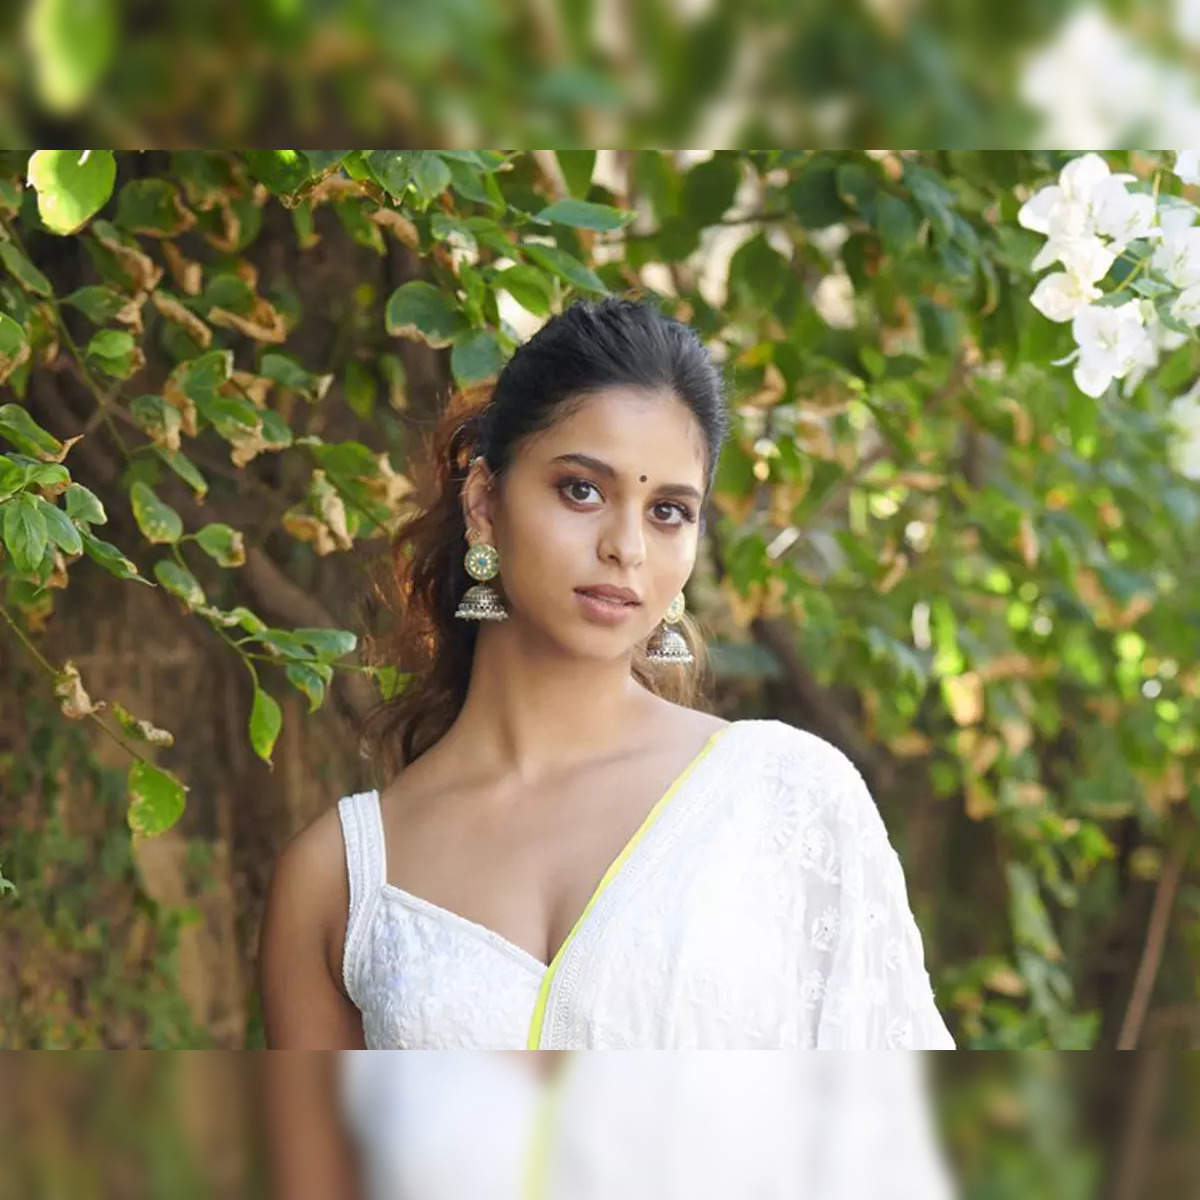 16 17 Saal Ladki Sexy Picture - khan: Desi girl vibes: Suhana Khan is a vision in Manish Malhotra's white  chikankari lehenga - The Economic Times